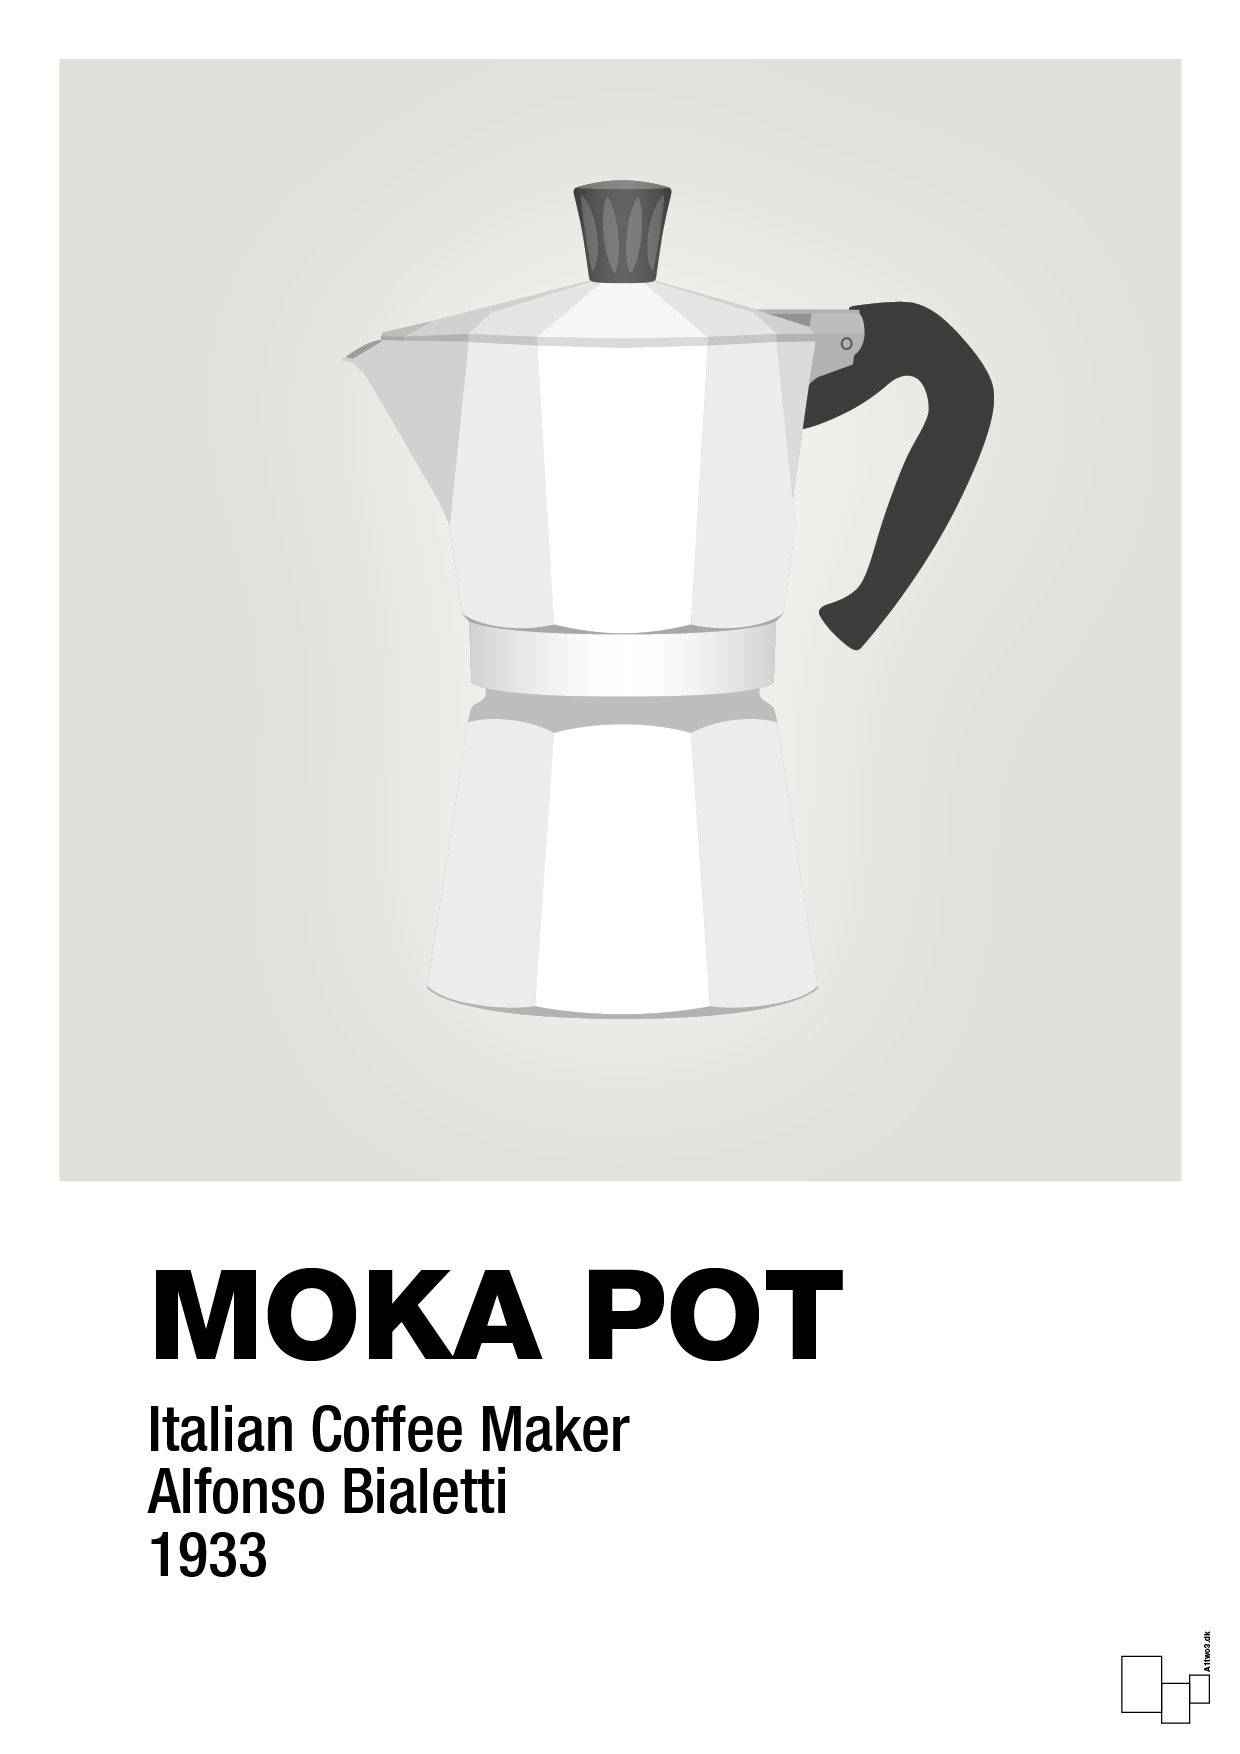 moka pot - Plakat med Mad & Drikke i Painters White